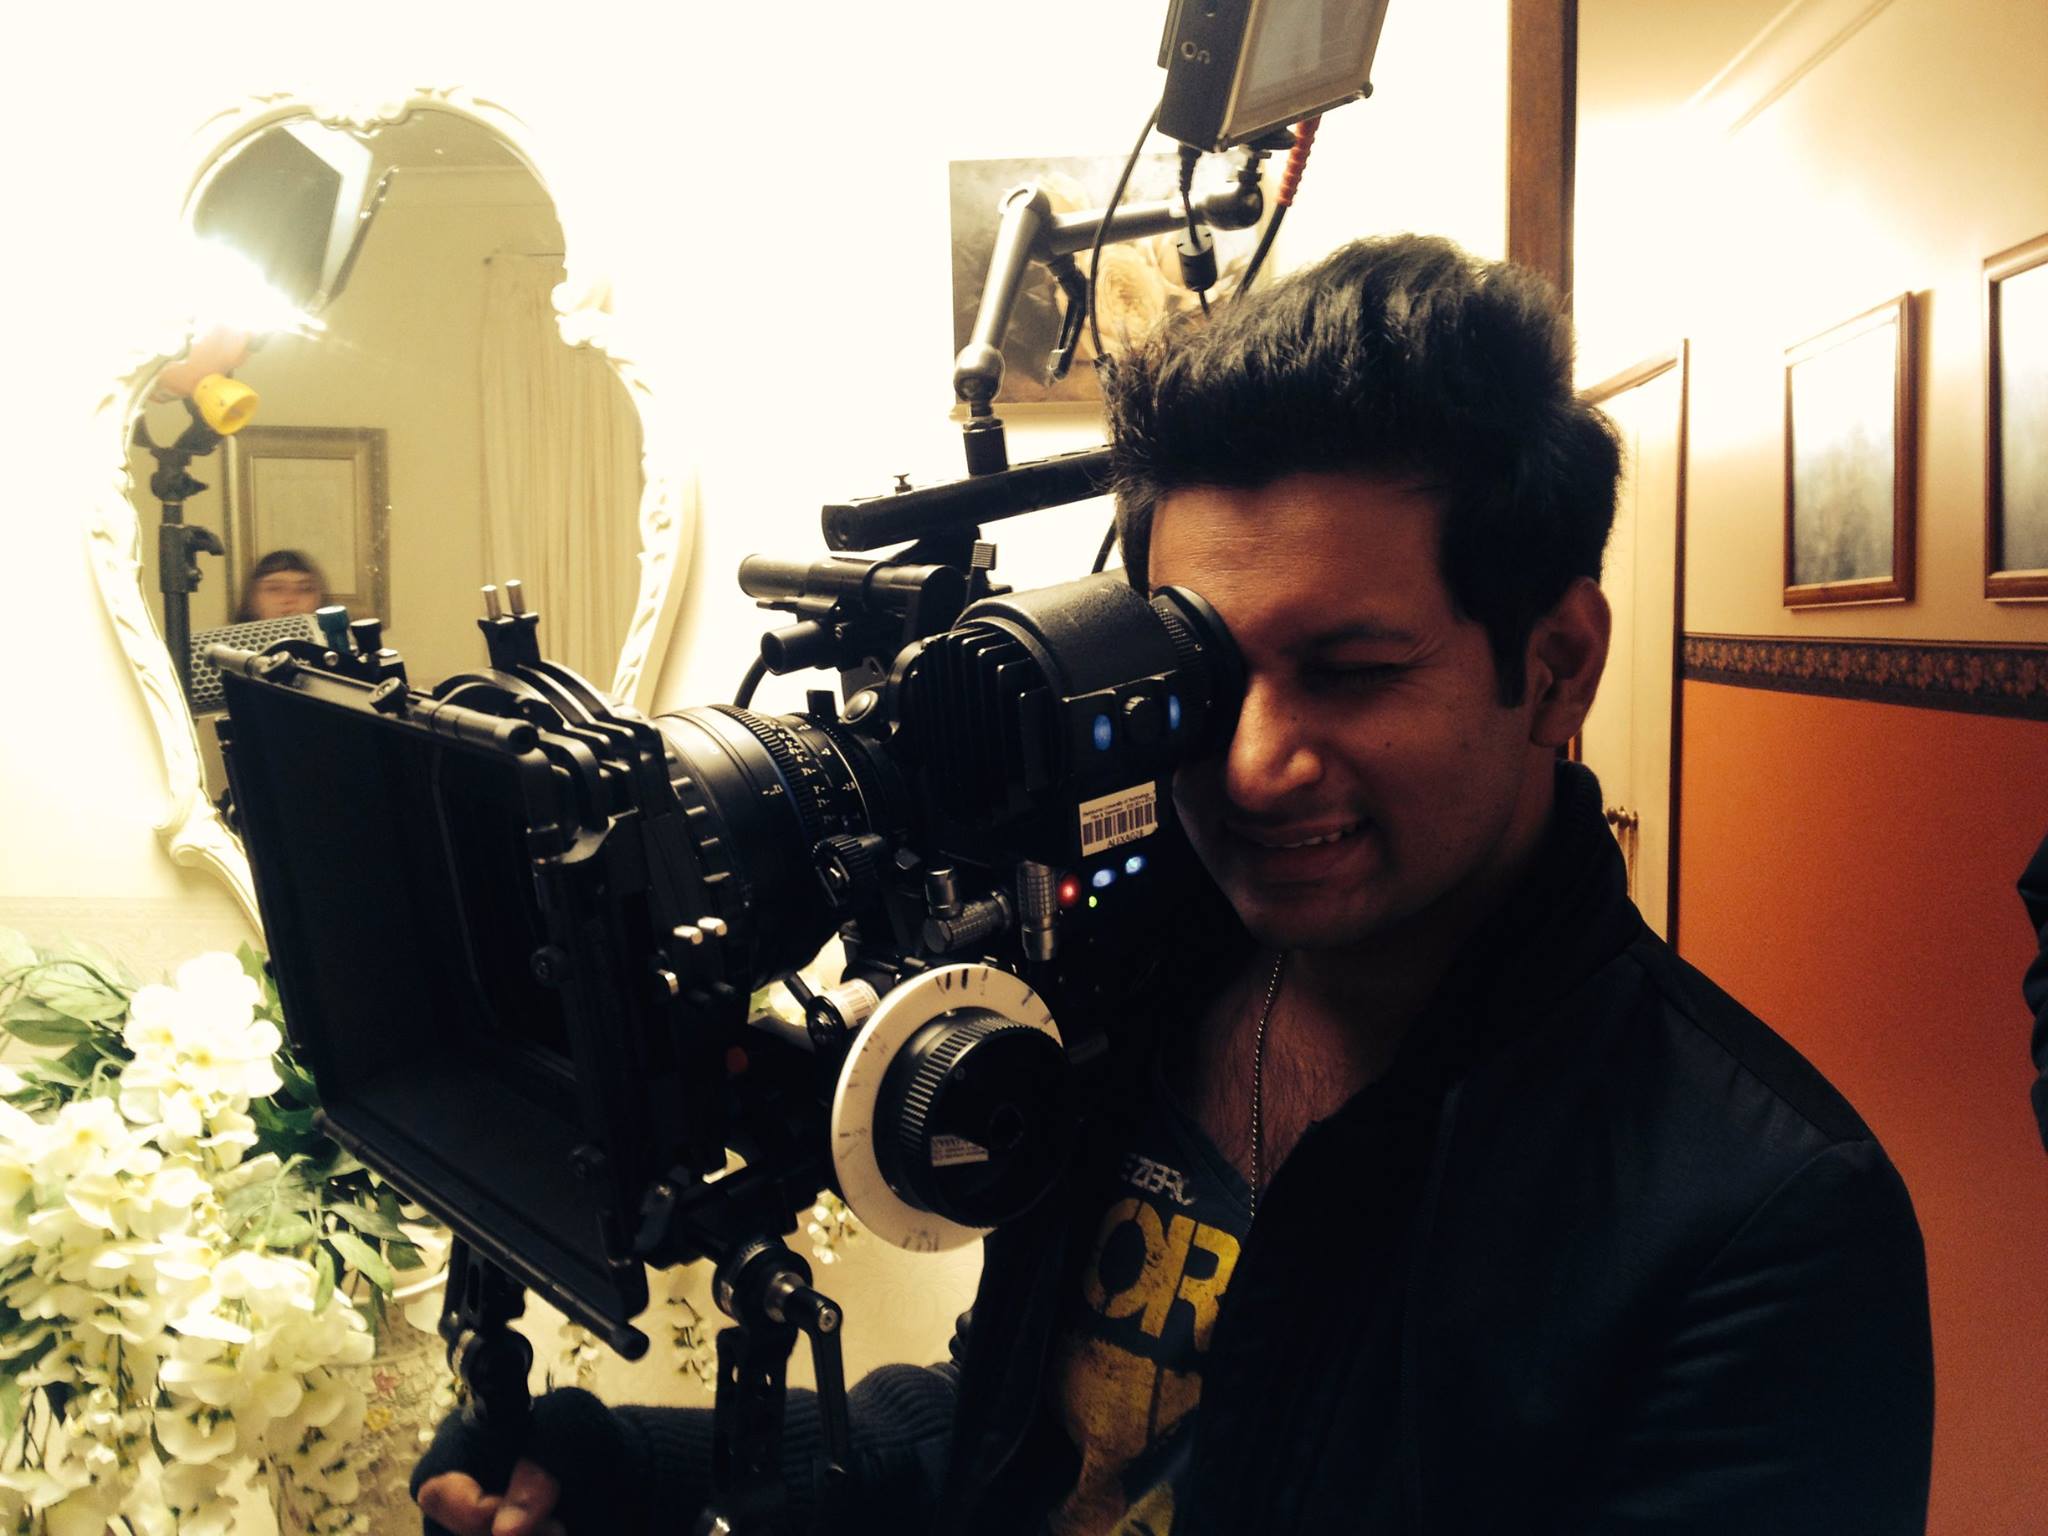 Salman with Arri Alexa, On set of 